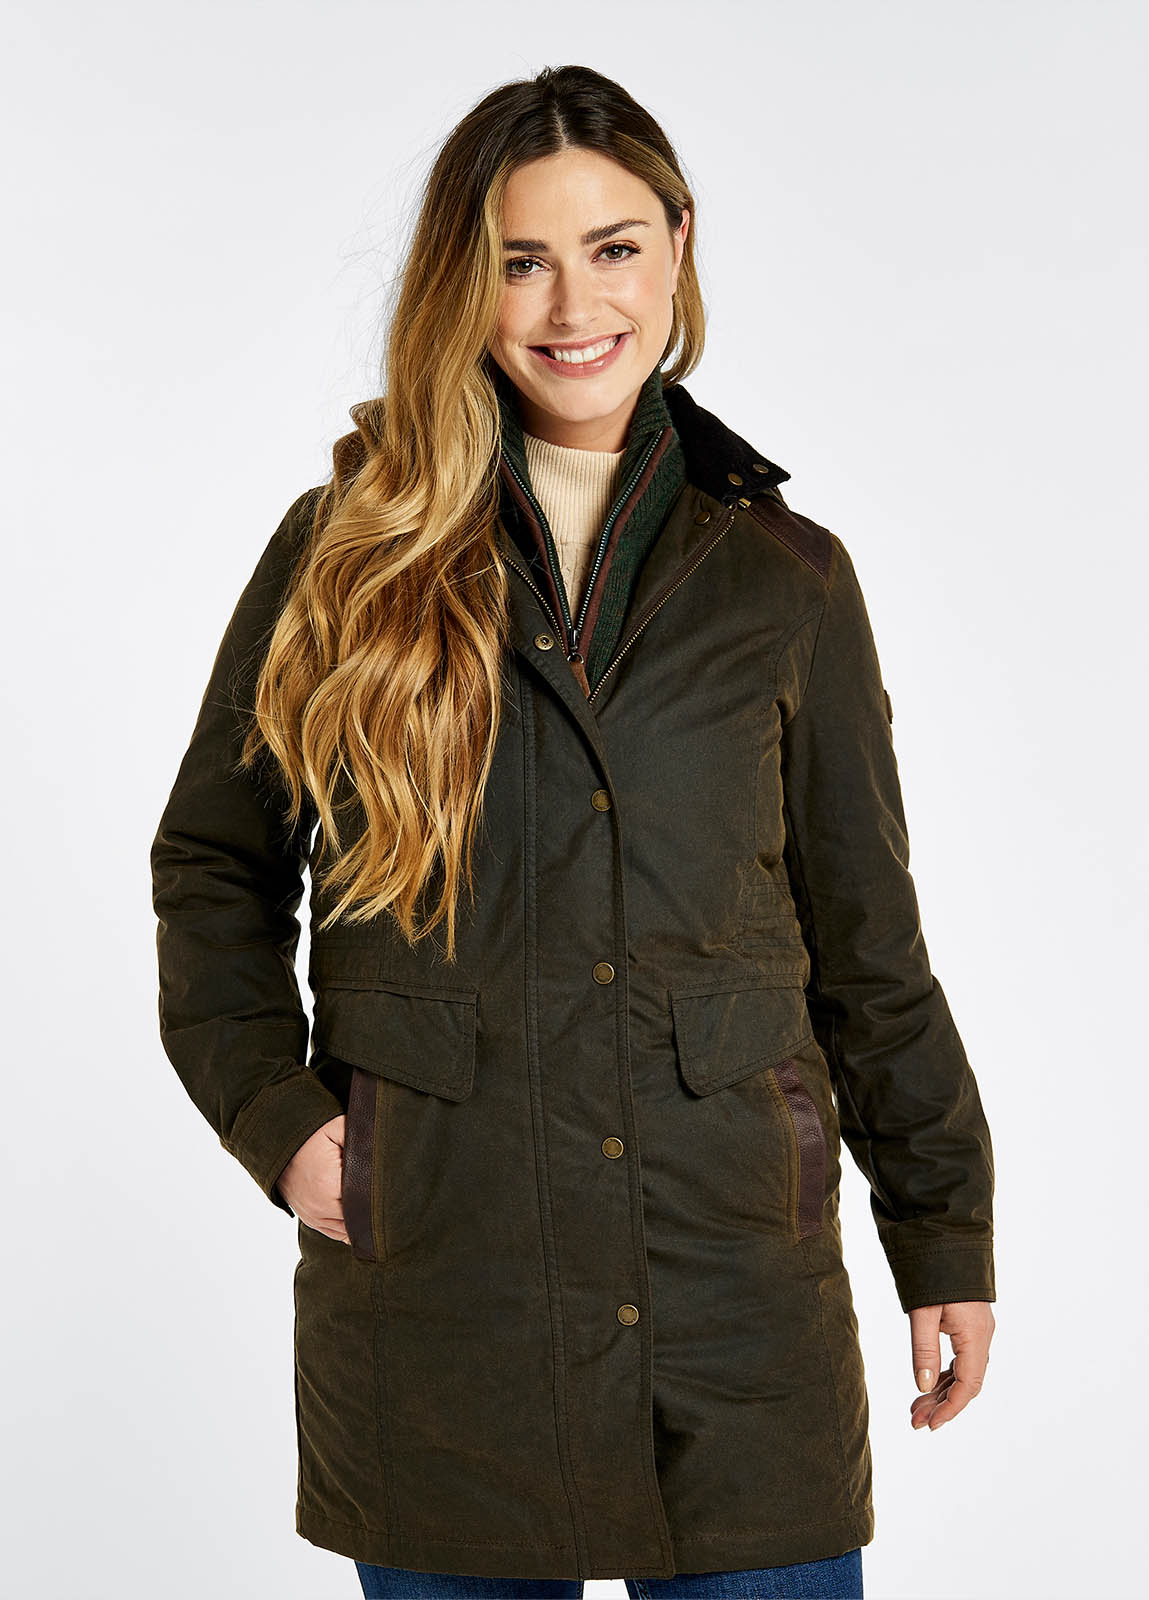 Womens Jacket UK 12 14 Military Style Look Rookie Ladies Jacket Black Khaki